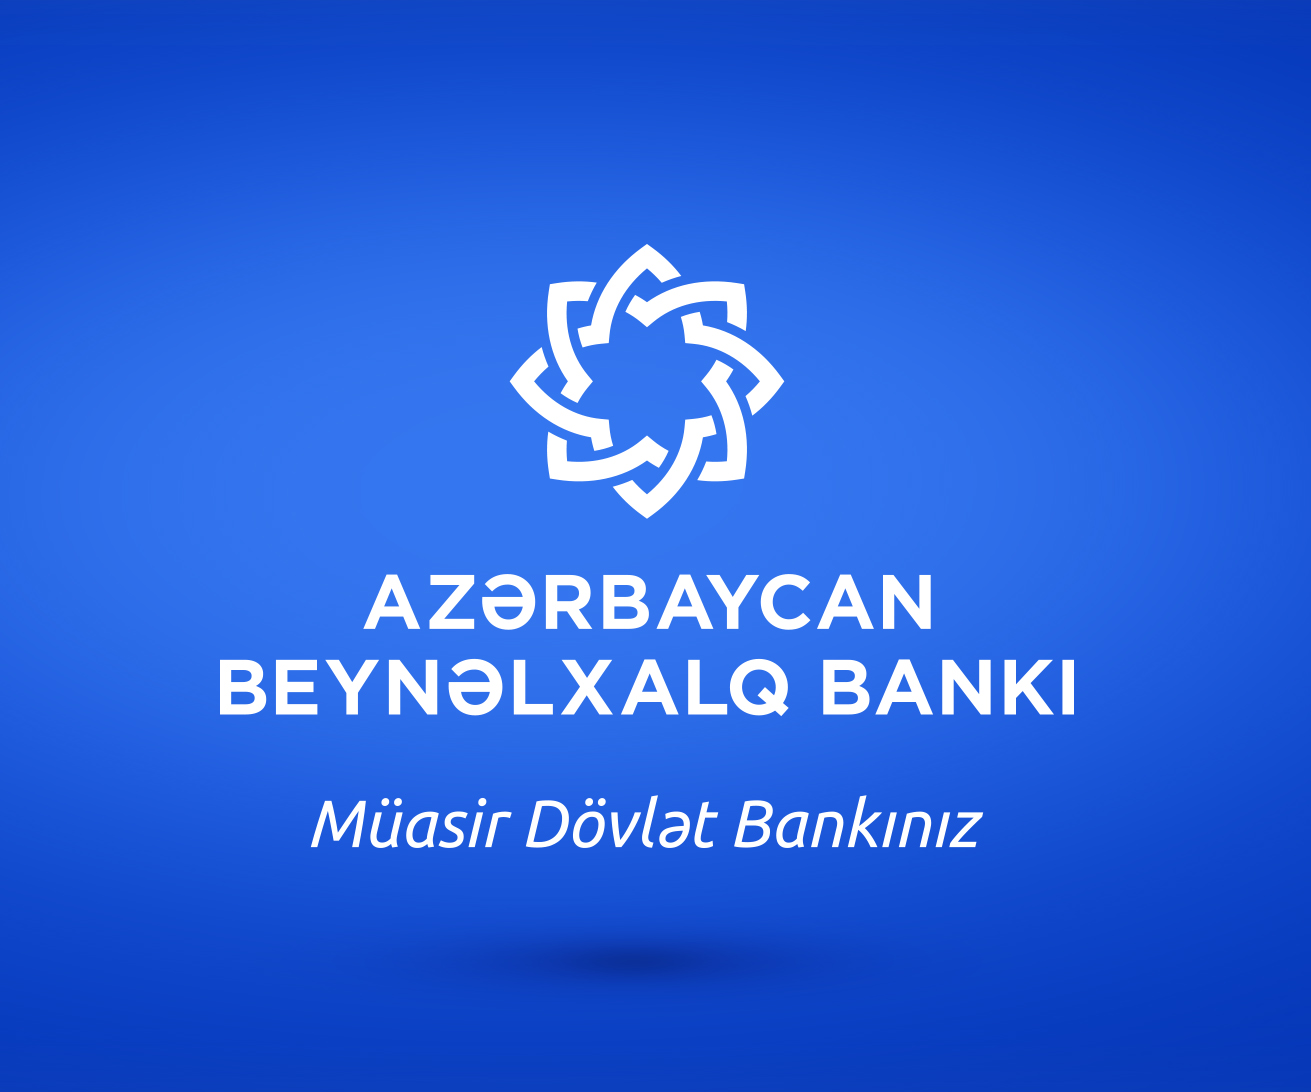 Акция по сдаче крови в Международном банке Азербайджана